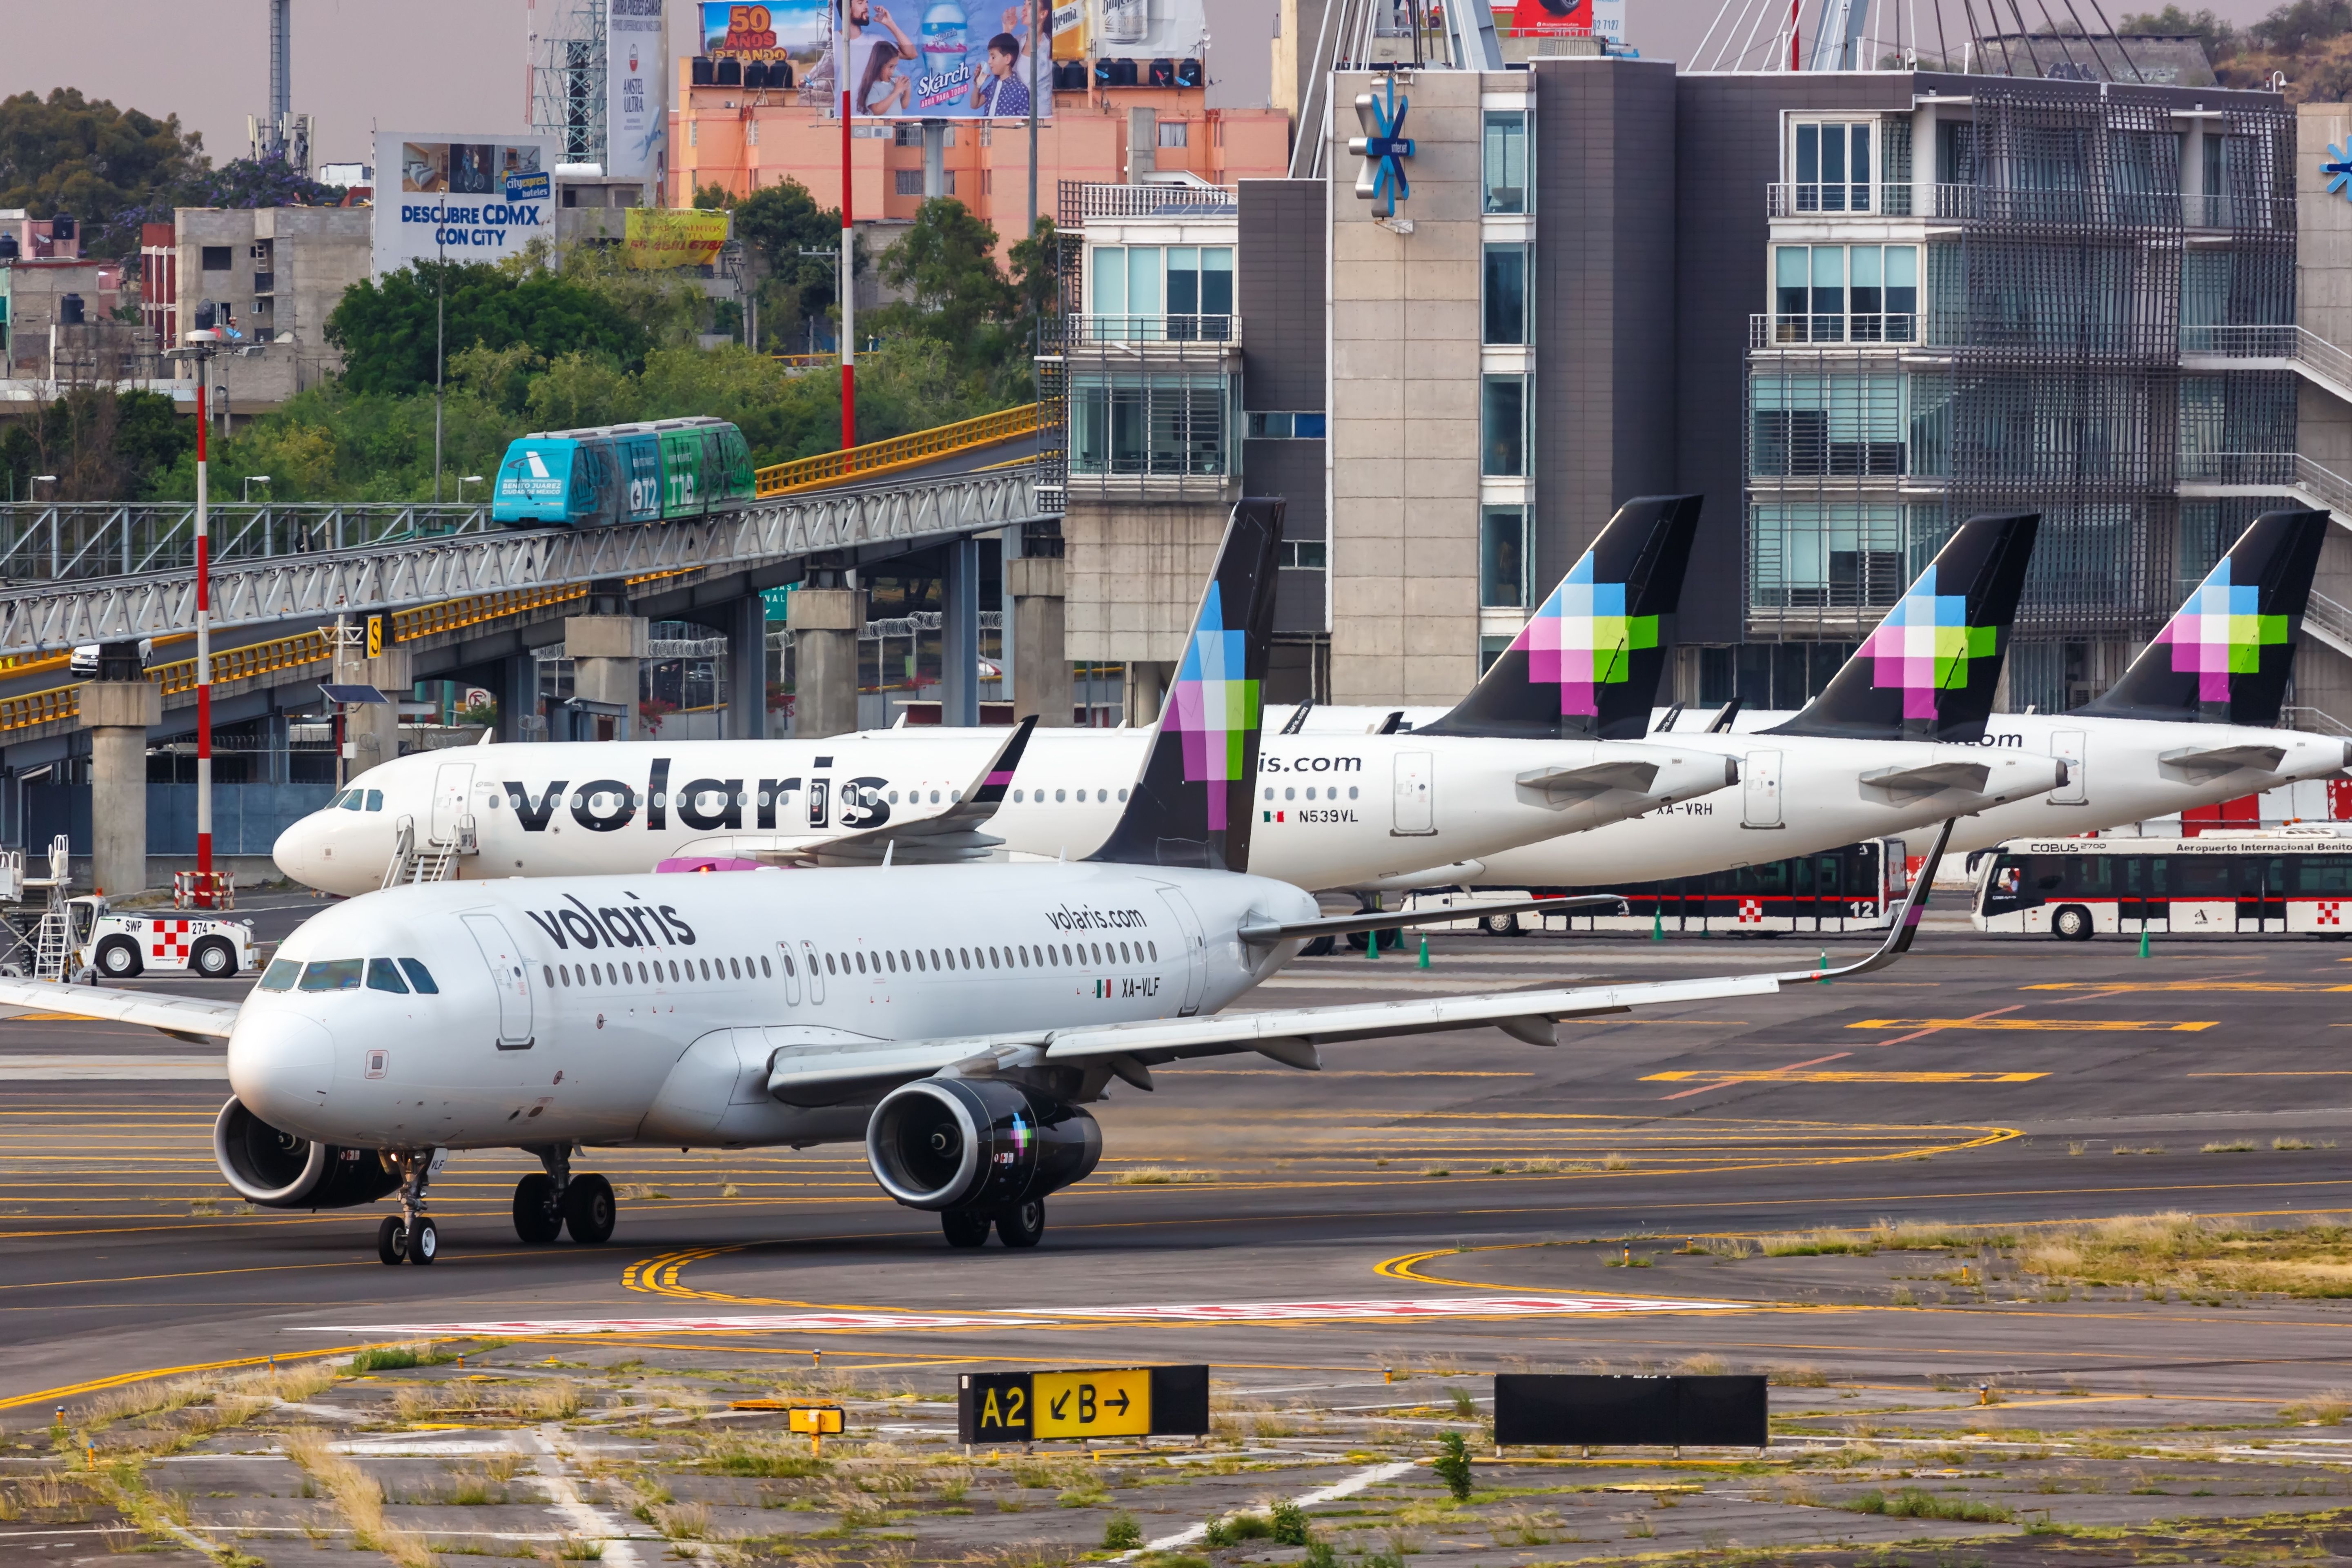 Several Volaris aircraft